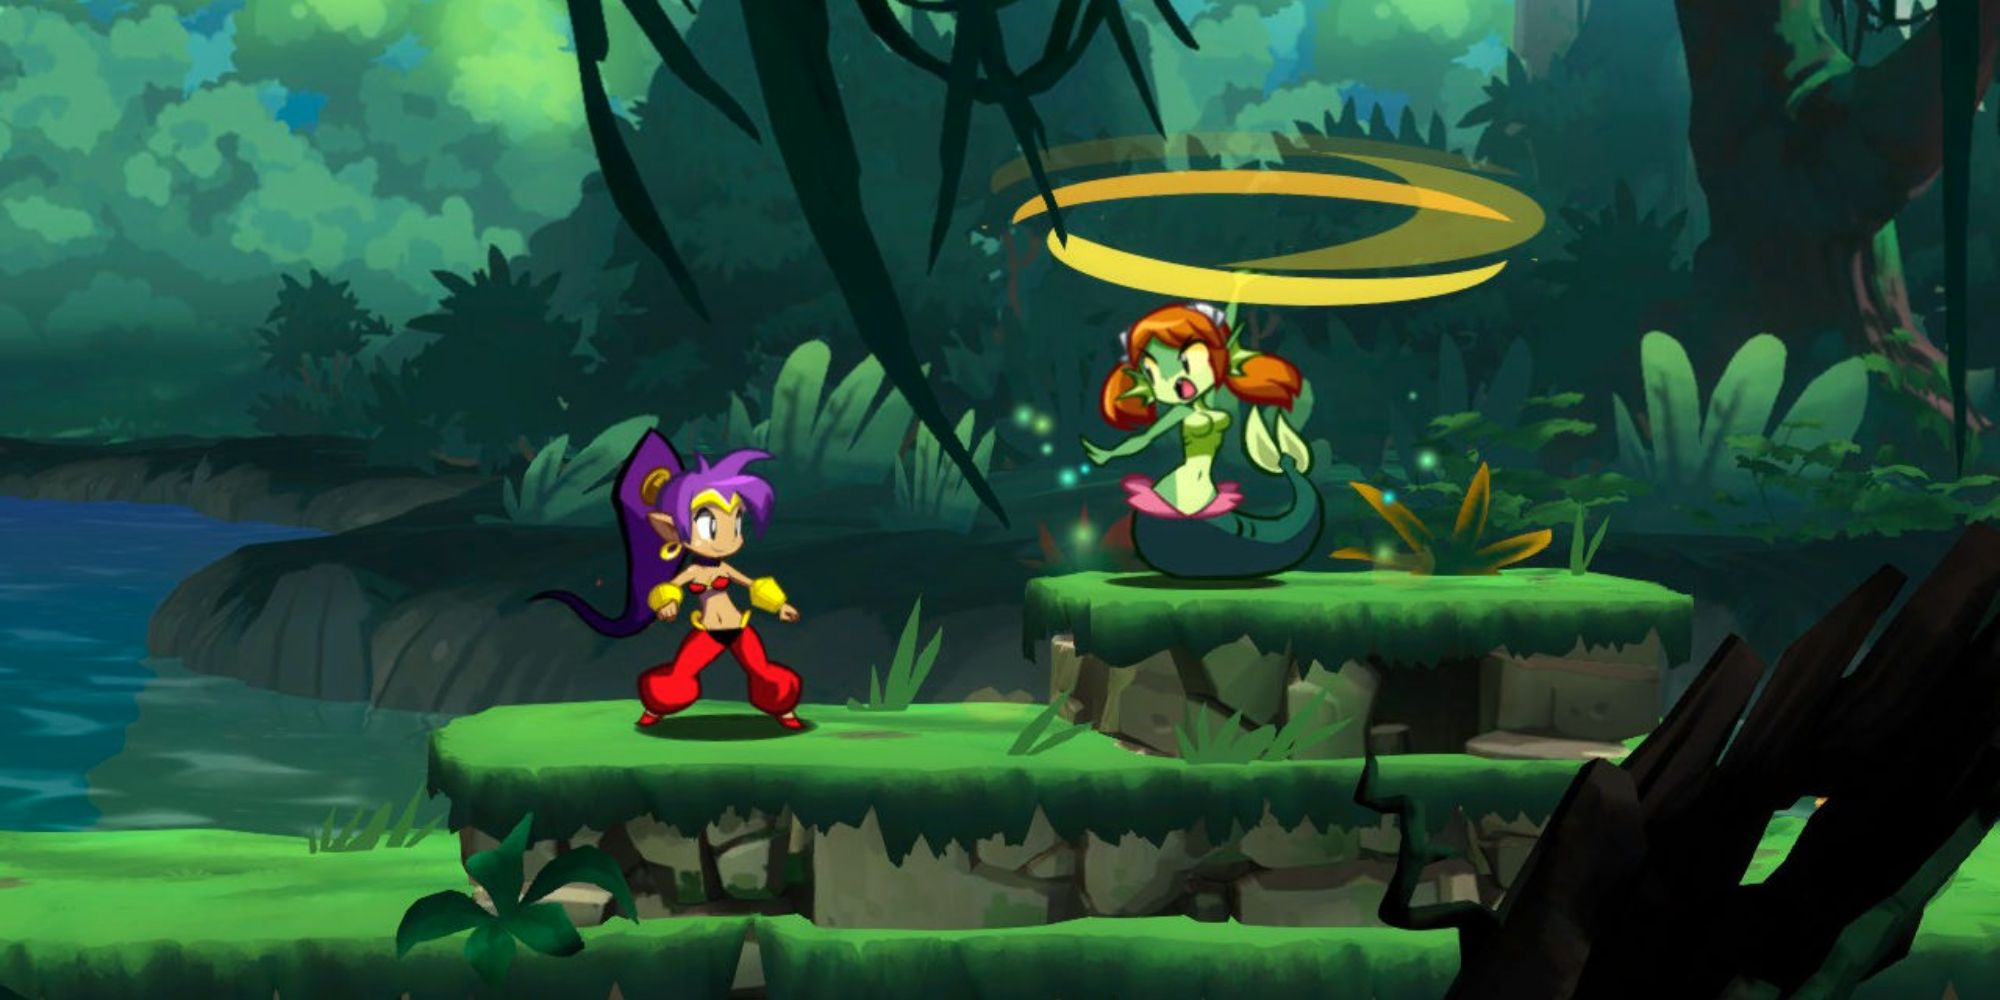 Shantae confronting a mermaid